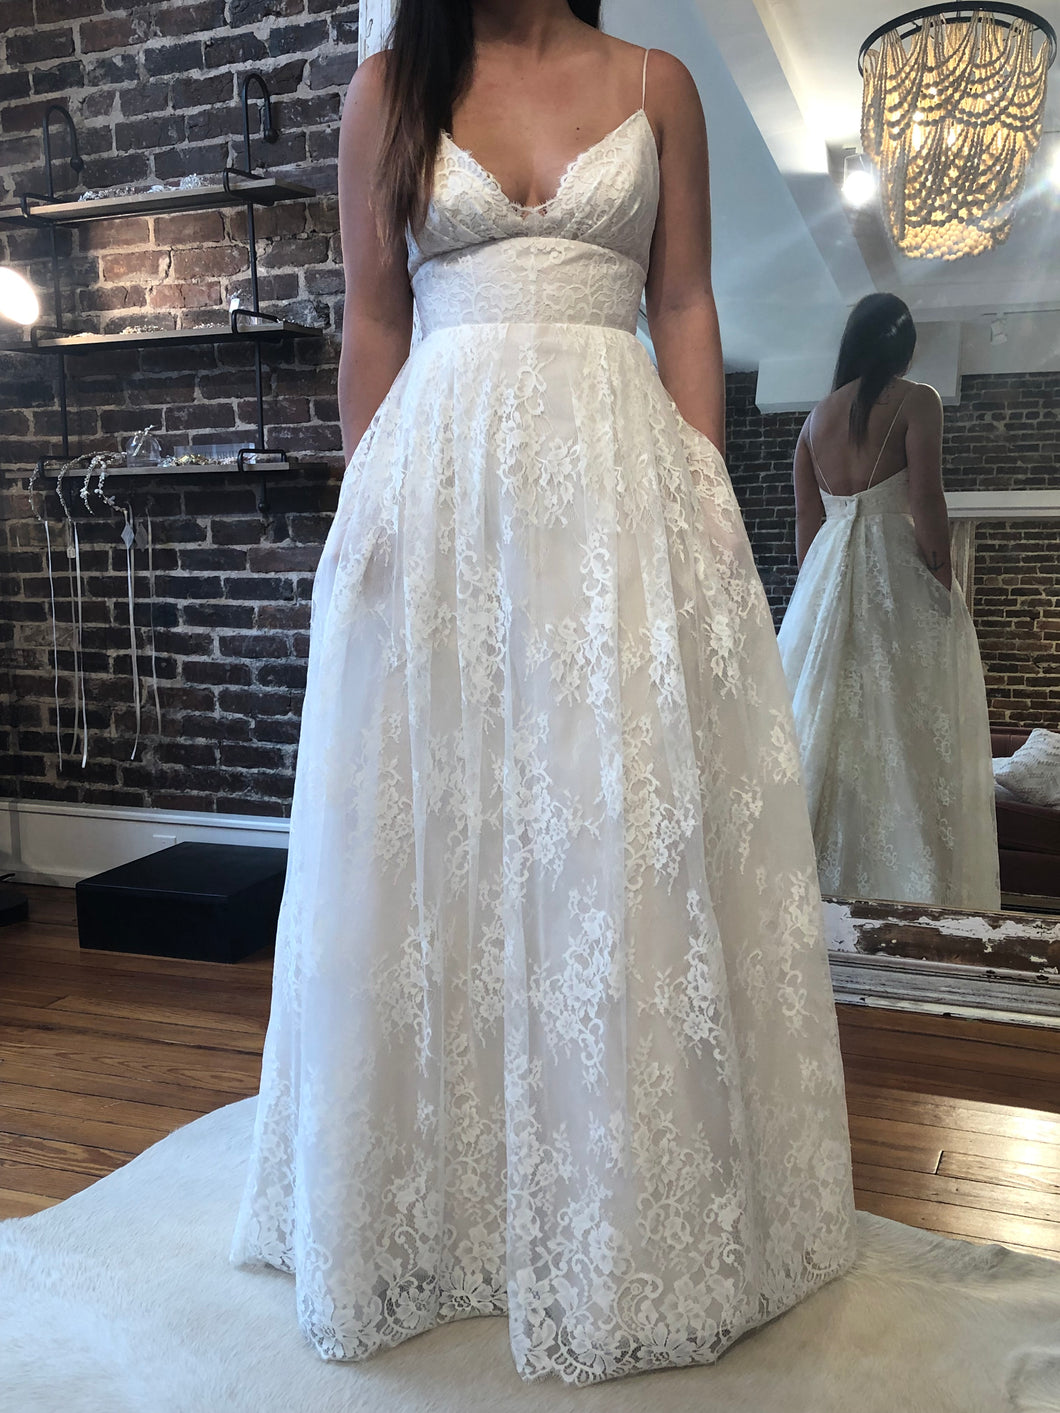 Lea Ann Belter 'Luna' size 14 new wedding dress front view on bride